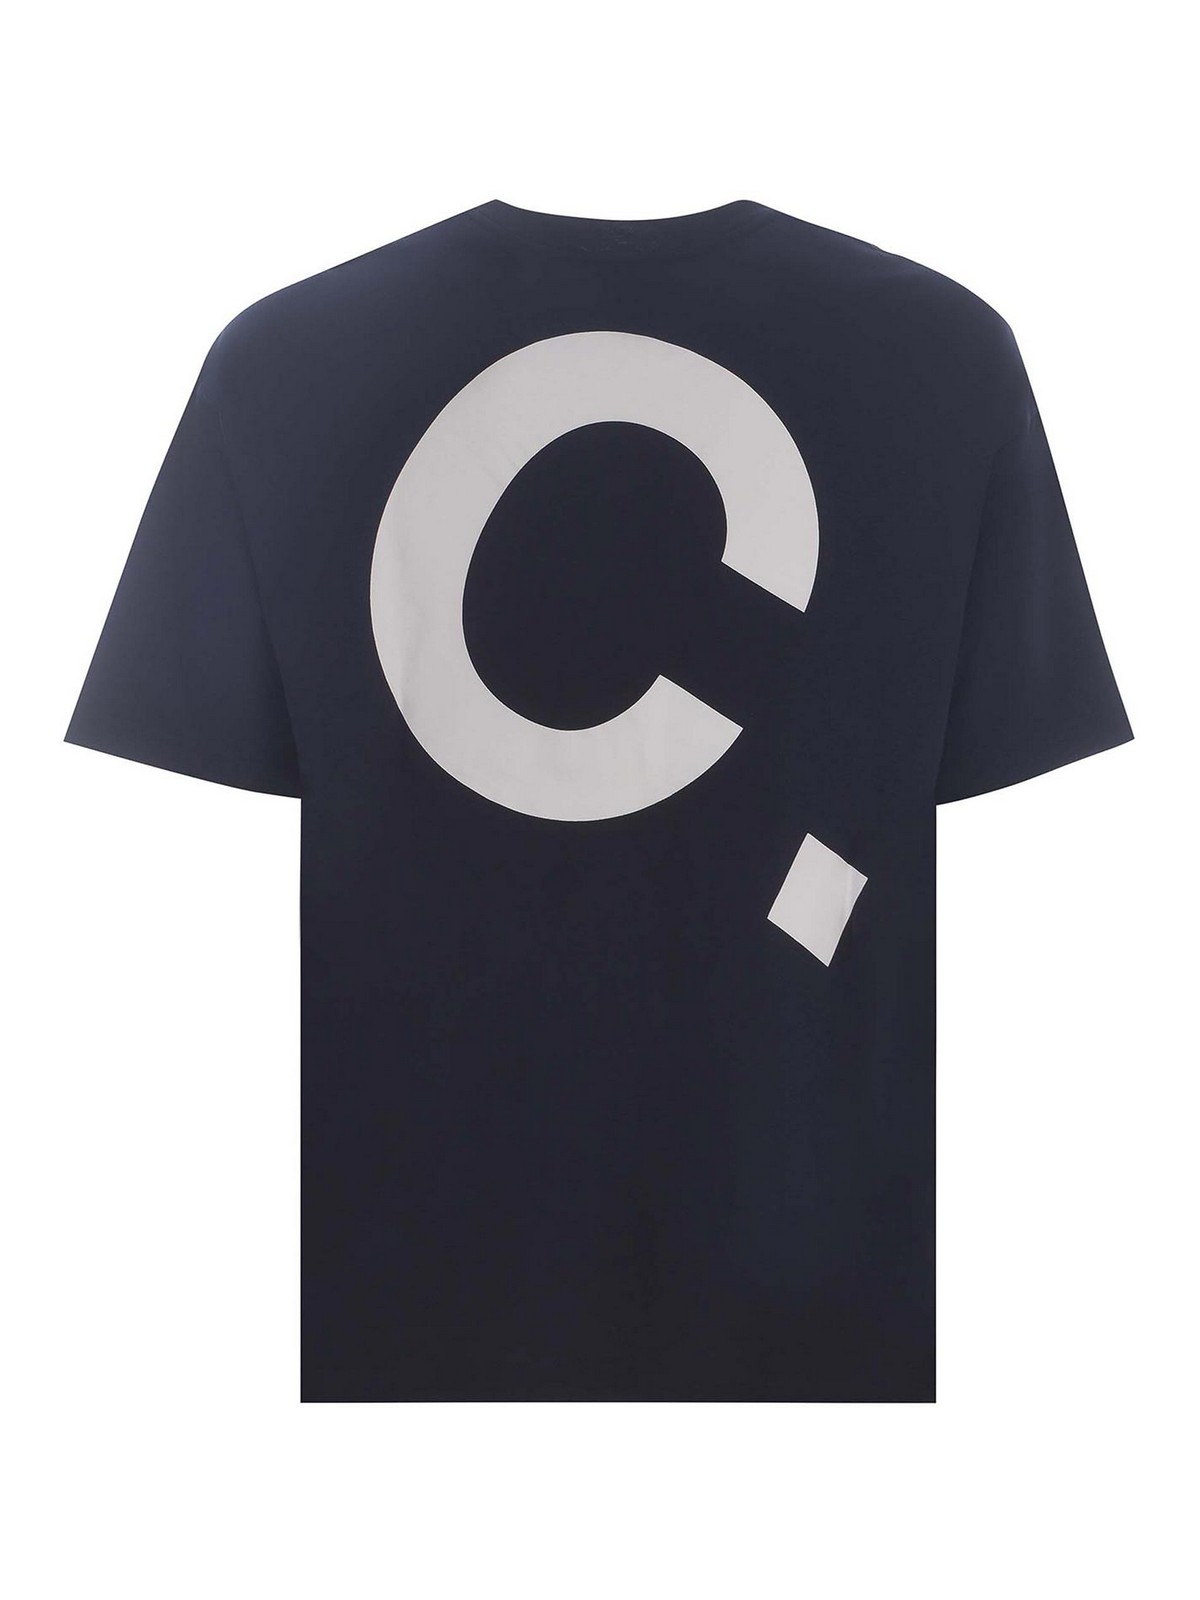 Shop Apc Camiseta - Lisandre In Blue